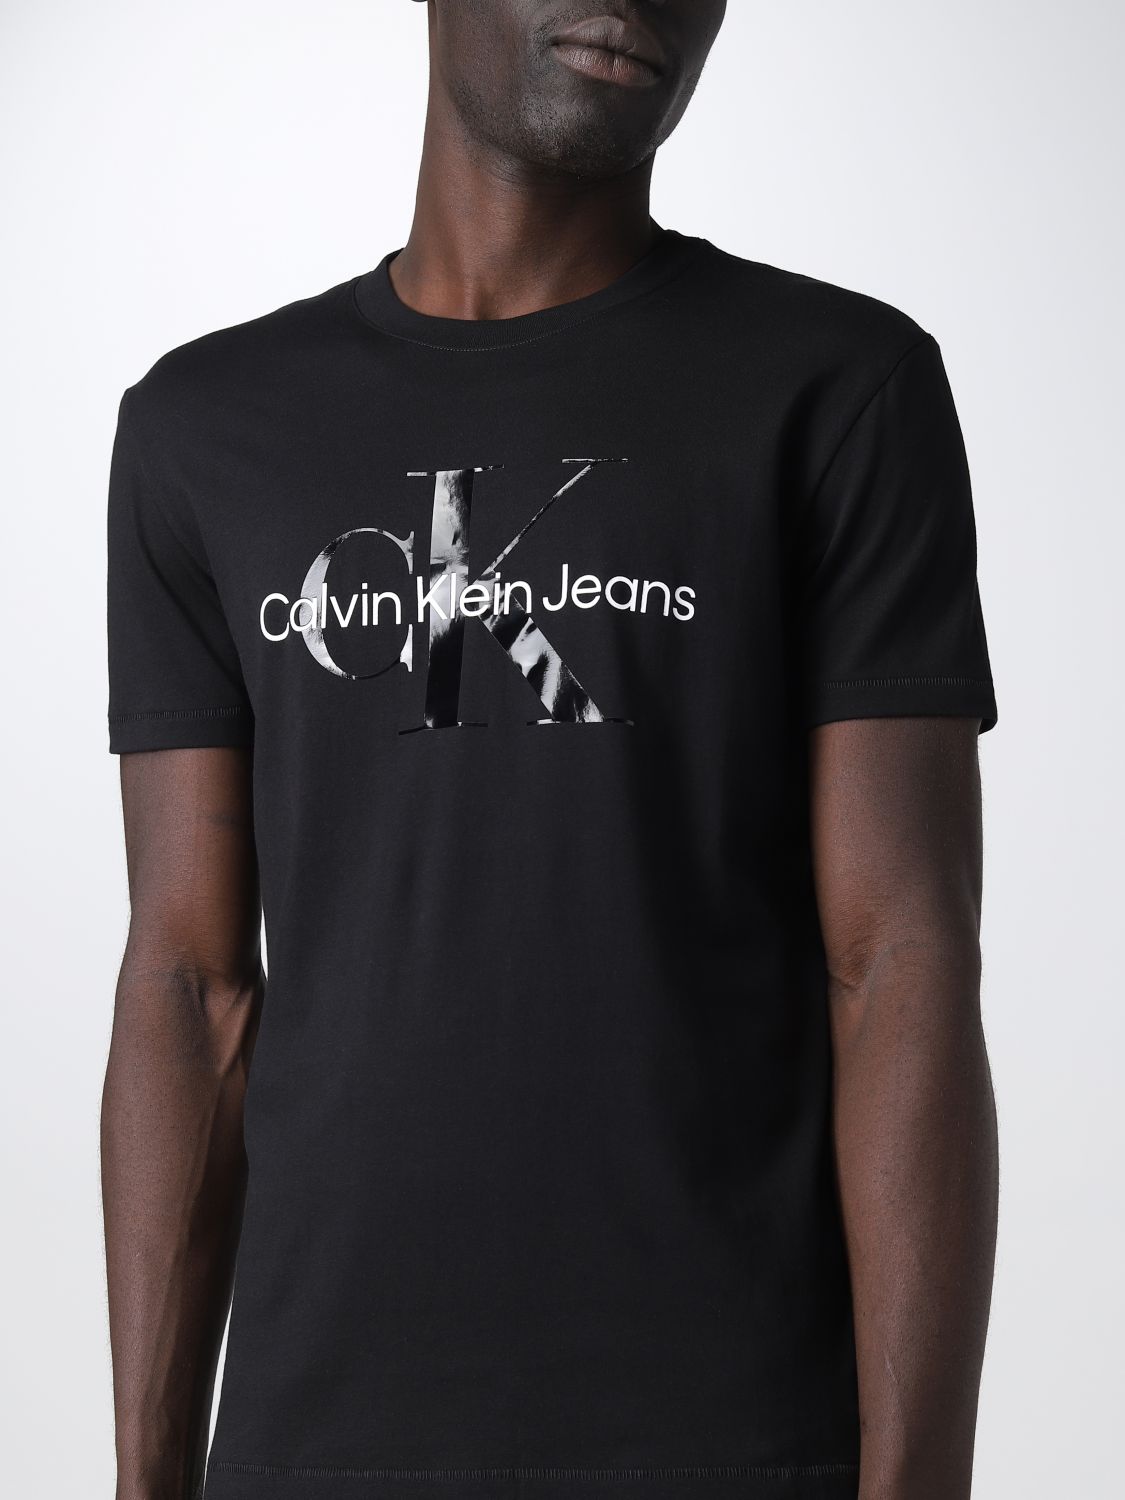 slidbane Mesterskab George Eliot CALVIN KLEIN JEANS: t-shirt for man - Black | Calvin Klein Jeans t-shirt  J30J320806 online on GIGLIO.COM